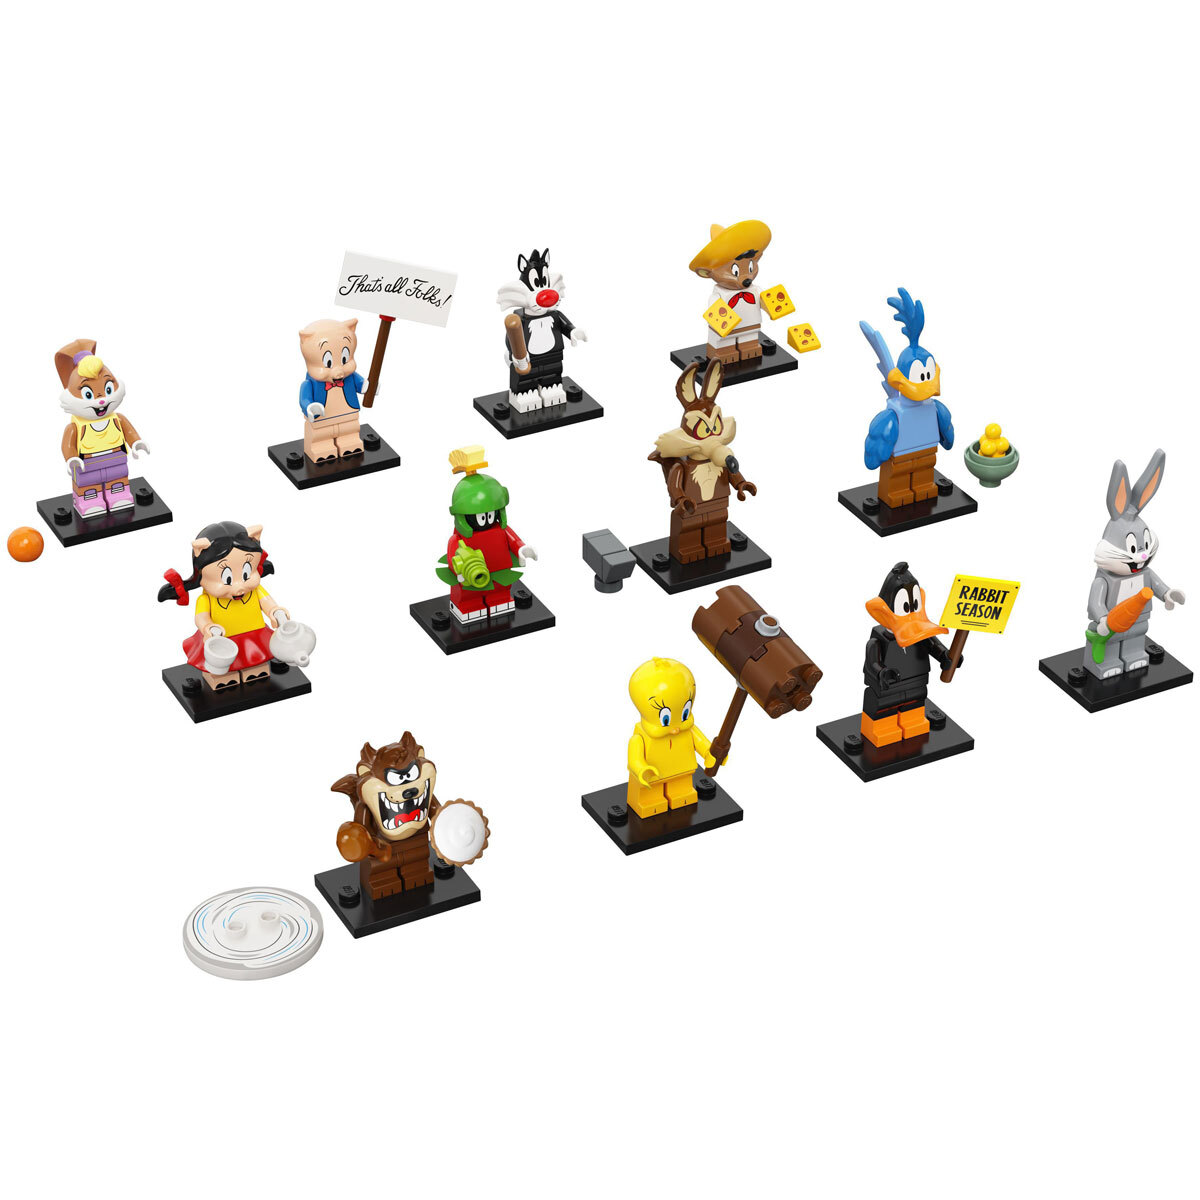 Buy LEGO Minifigures Looney Tunes 71030 All Figures 2 Image at Costco.co.uk